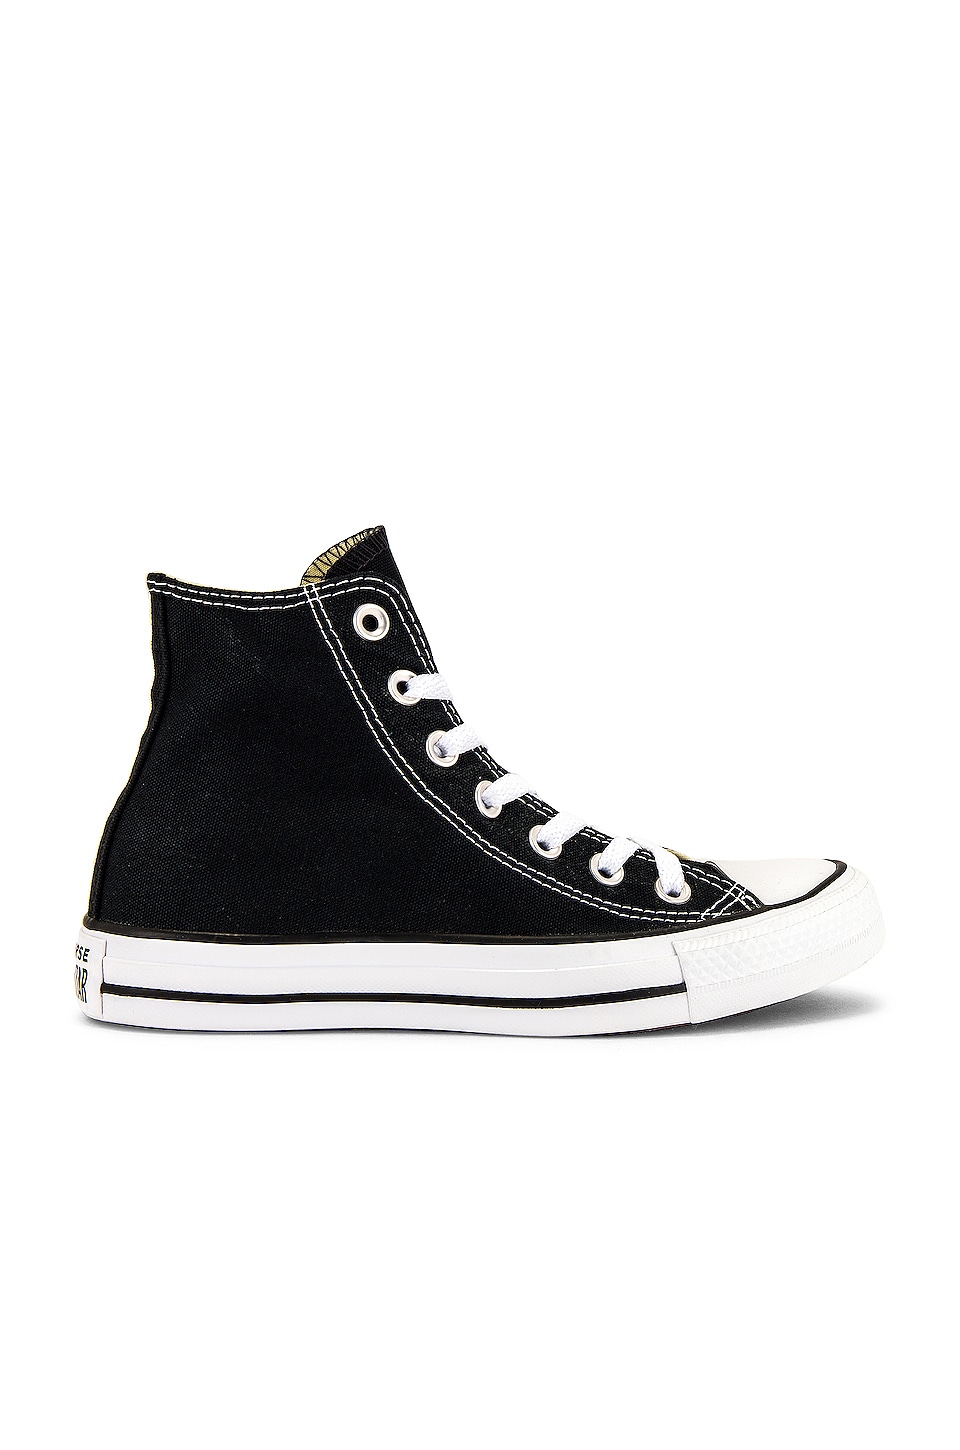 Converse Chuck Taylor All Star Hi Sneaker in Black | REVOLVE